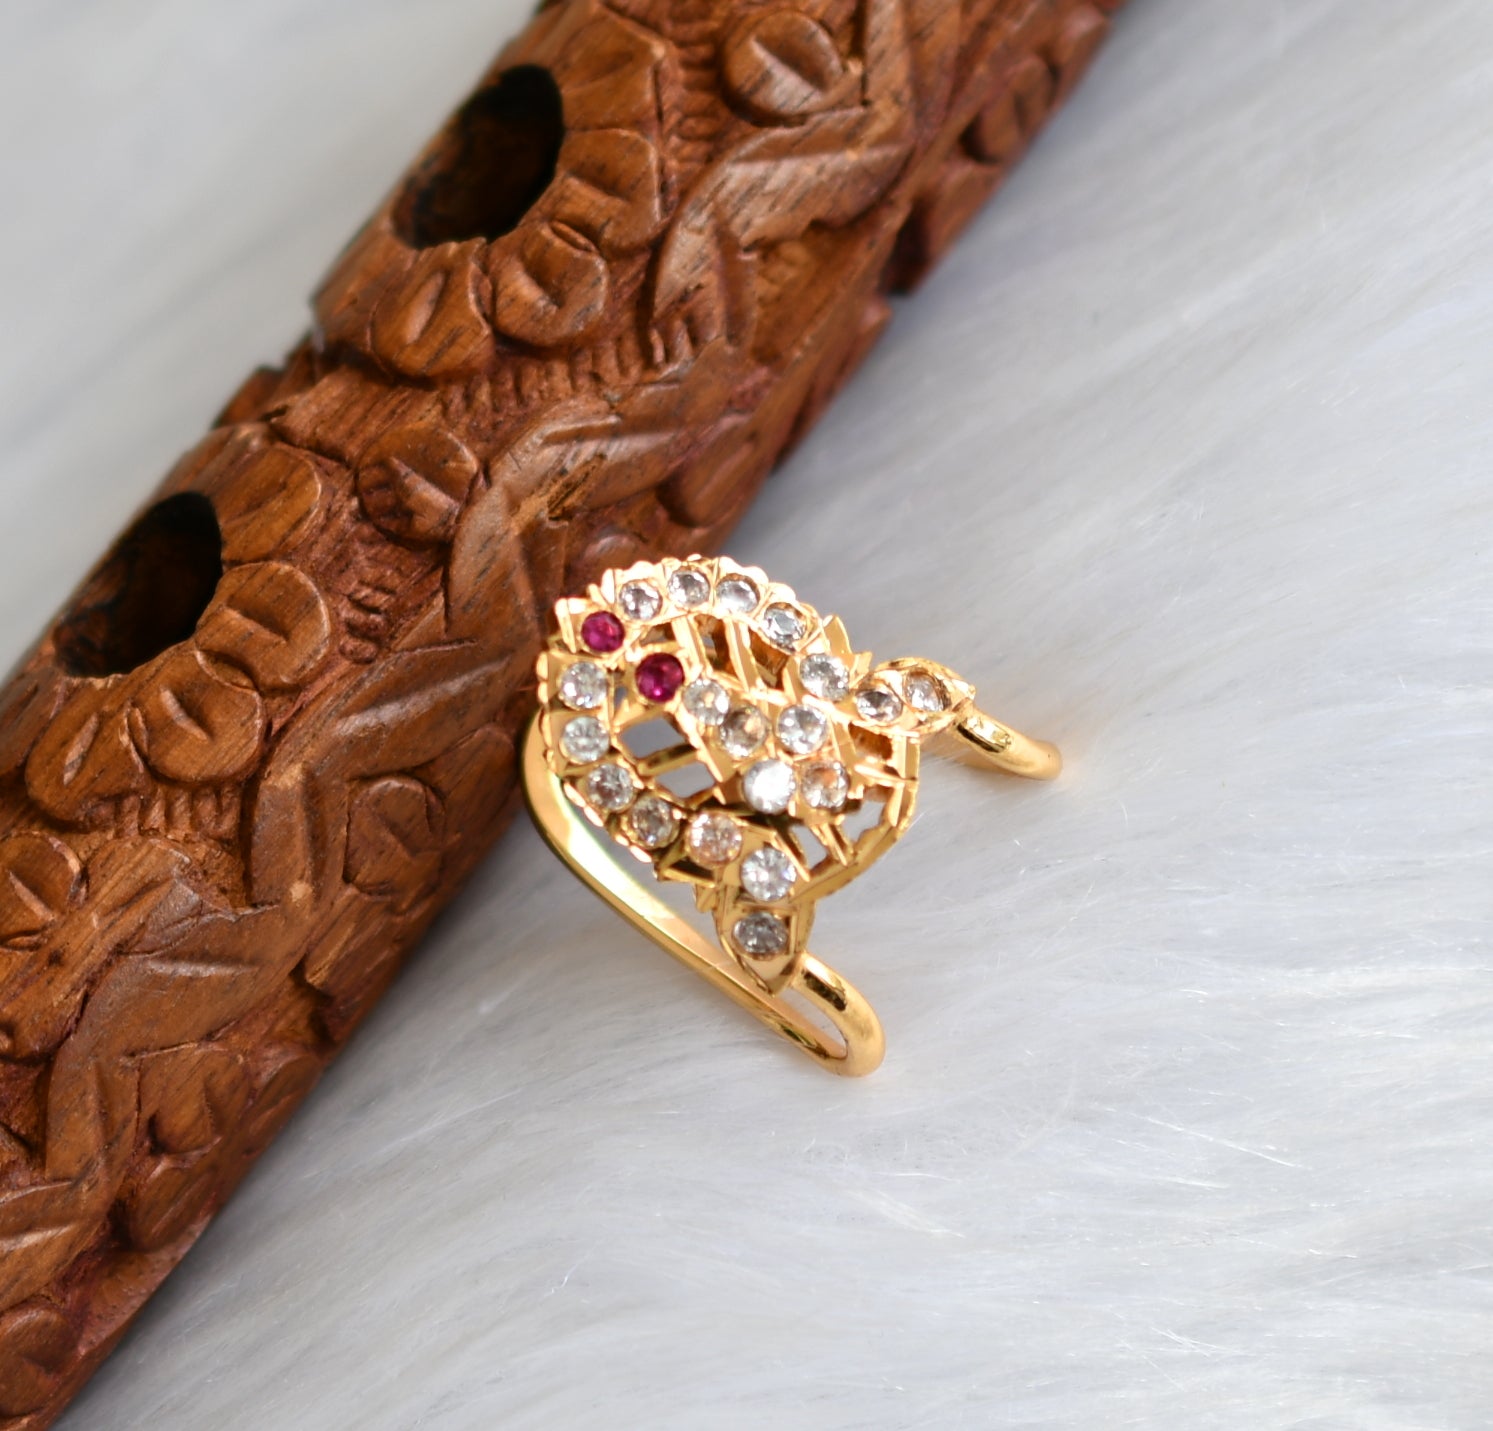 vanki rings in - 22K Gold Indian Jewelry in USA